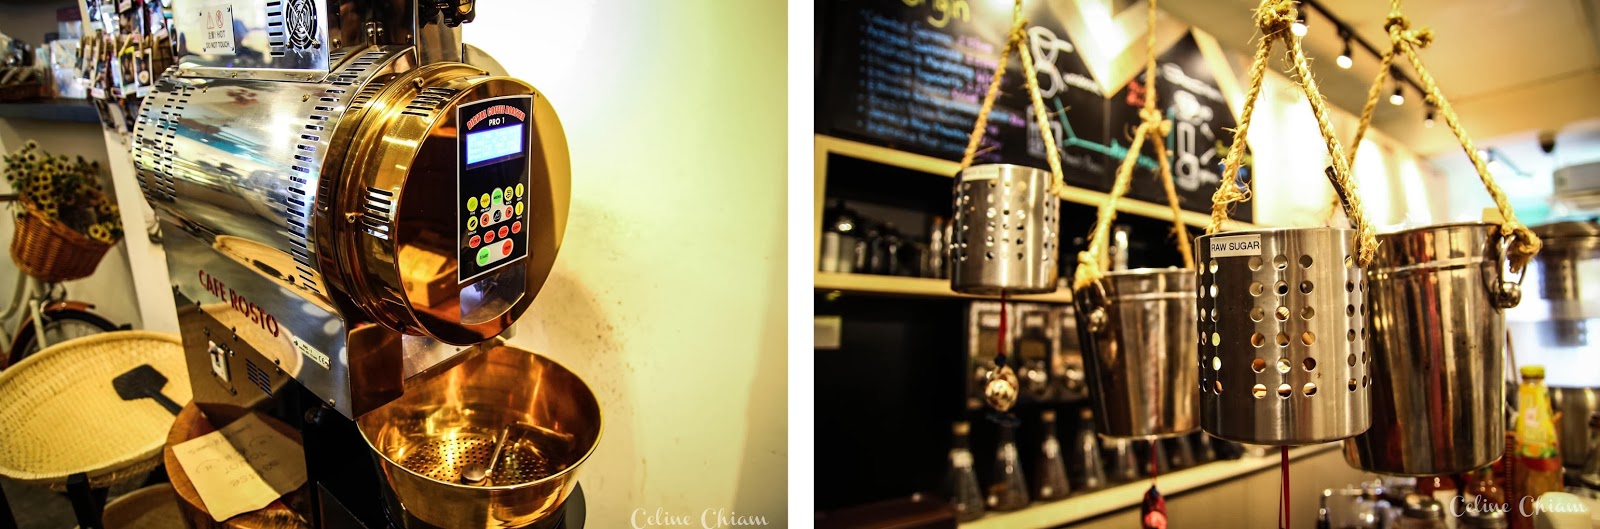 cafehopping+singapore+dgoodcafe